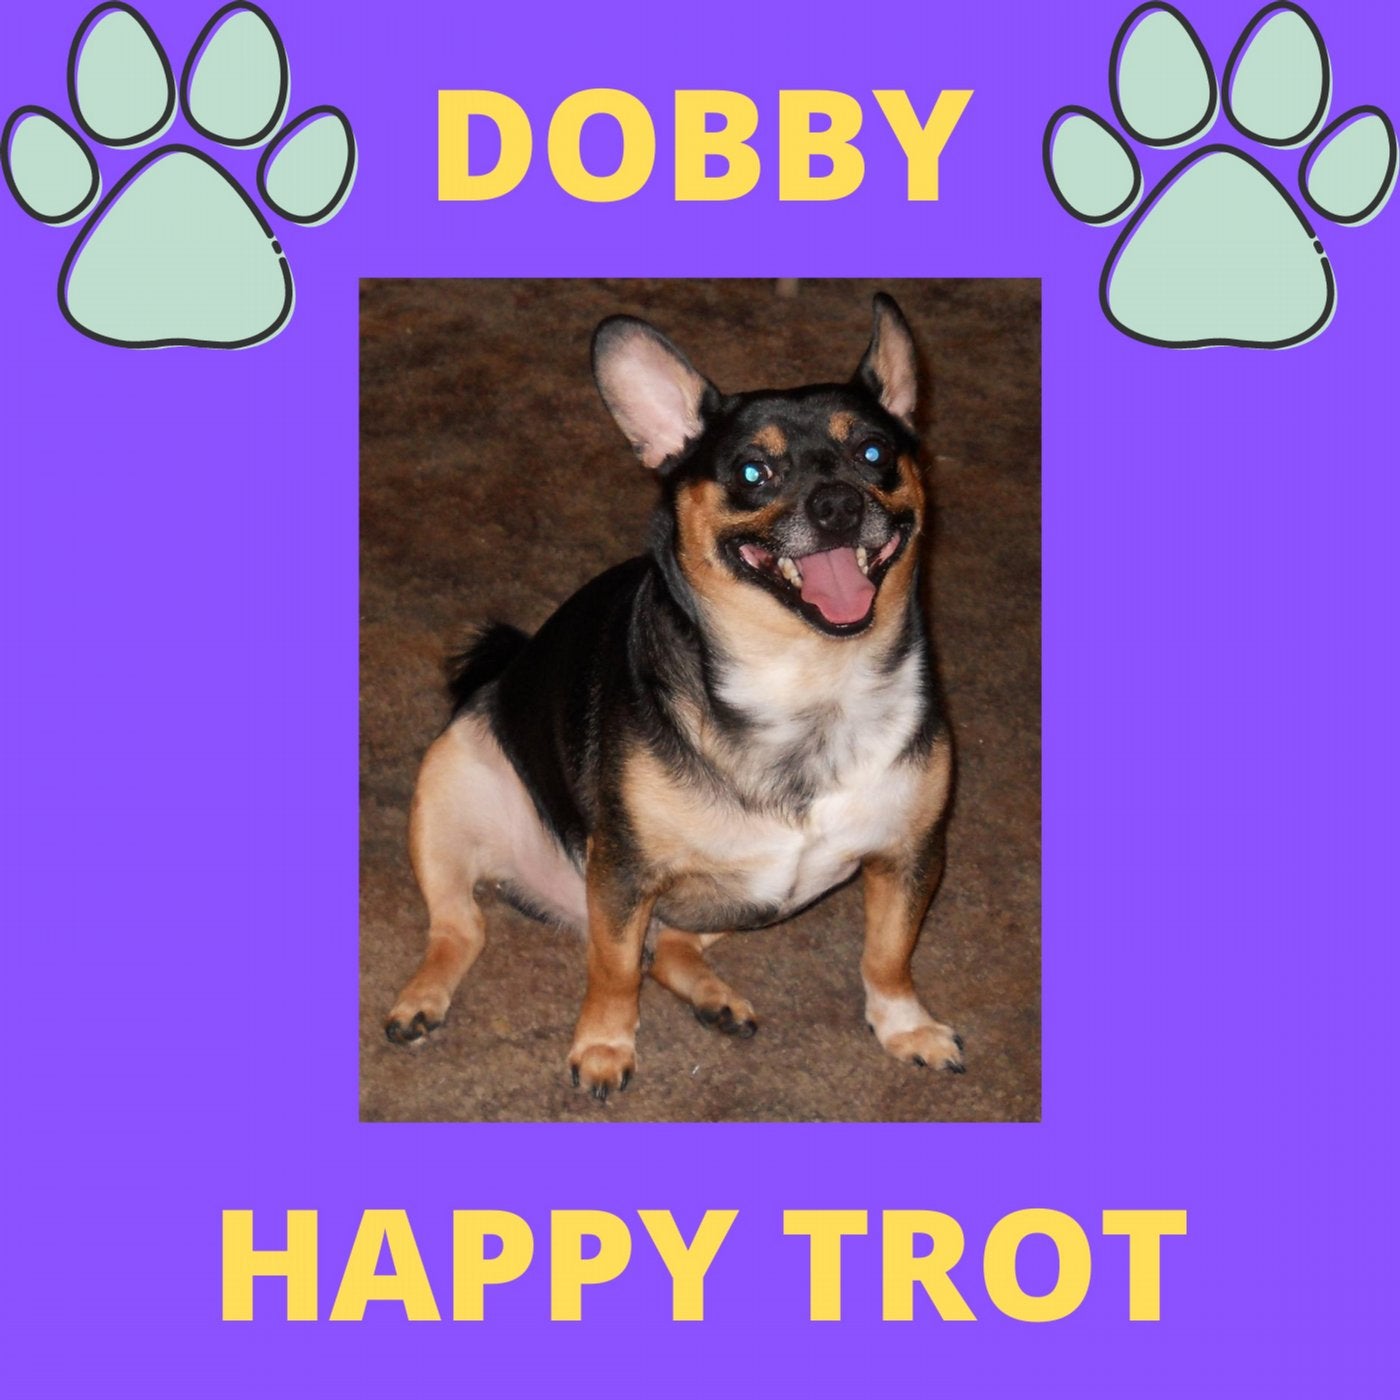 Dobby - Happy Trot